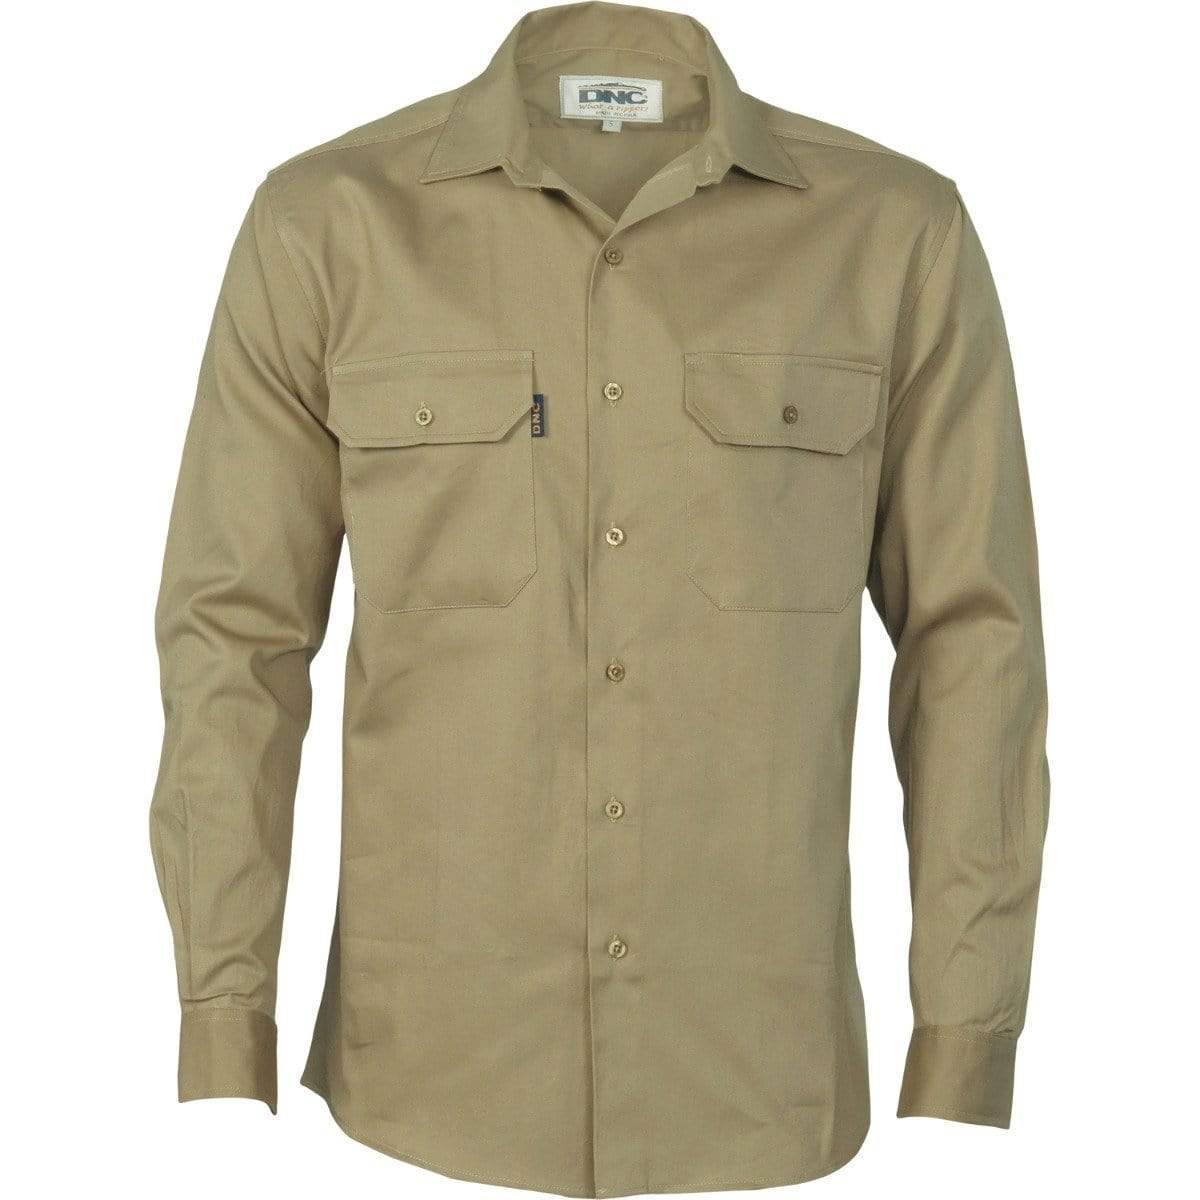 Dnc Workwear Cotton Drill Long Sleeve Work Shirt - 3202 Work Wear DNC Workwear Khaki XS 